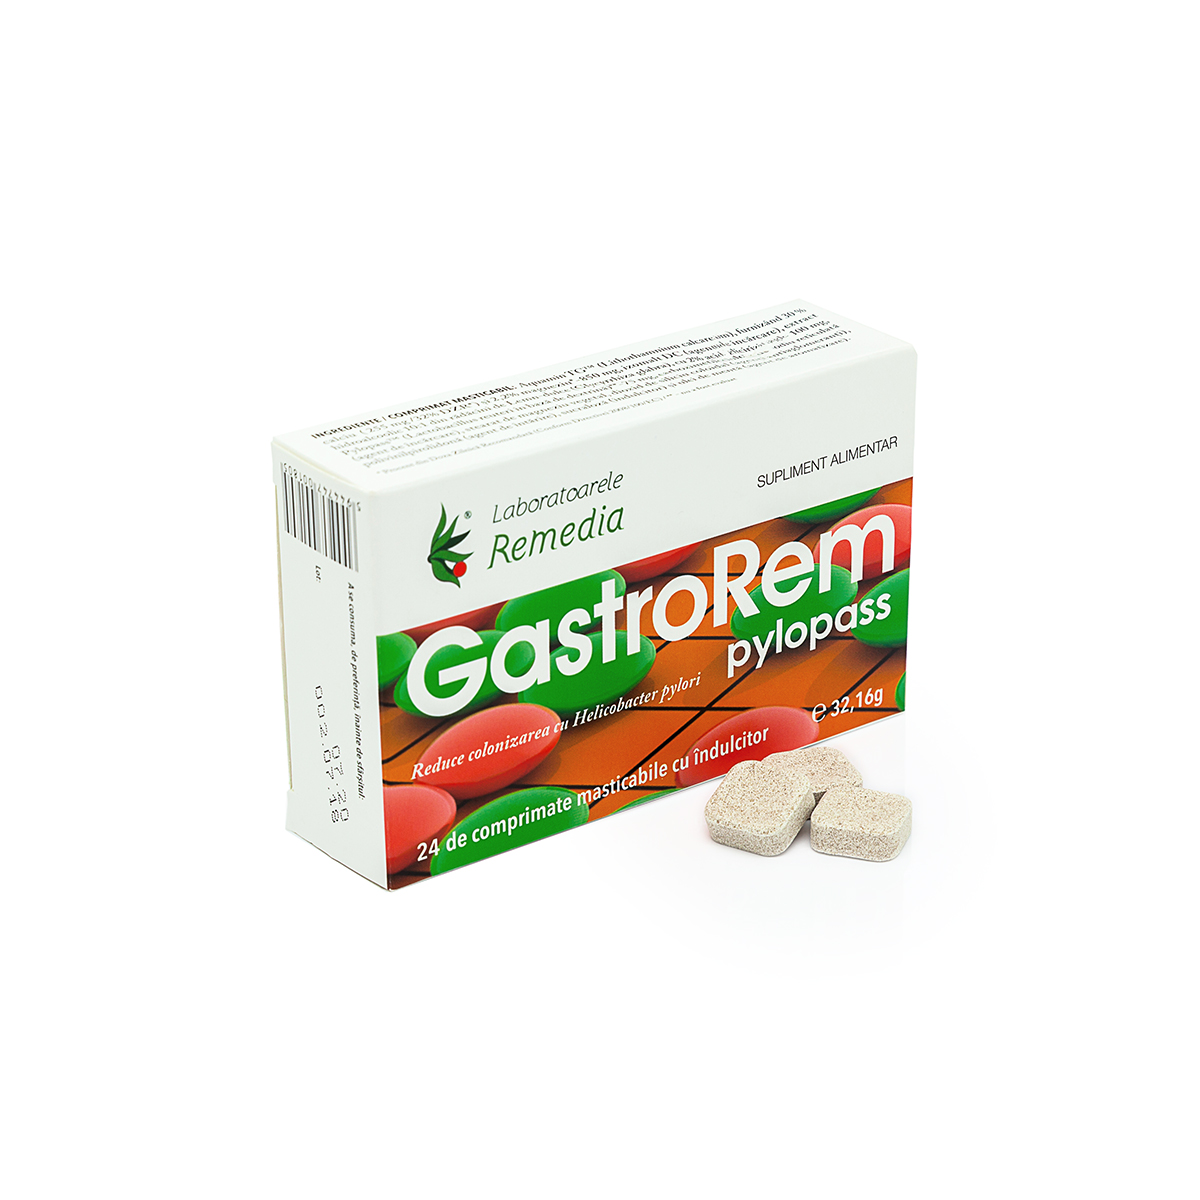 Gastrorem Pylopass, 24 comprimate, Remedia 